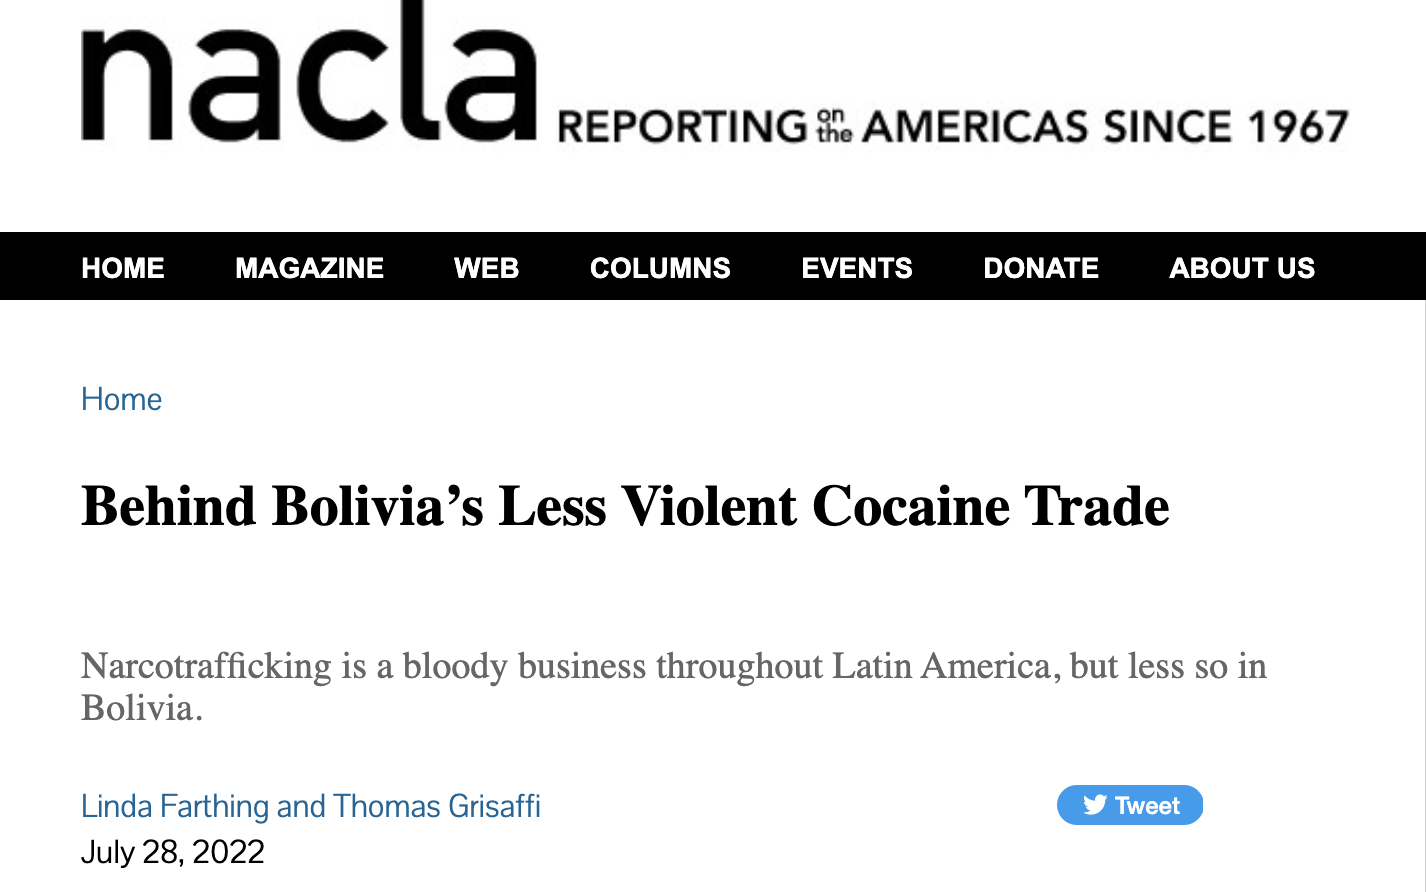 Behind Bolivia’s Less Violent Cocaine Trade